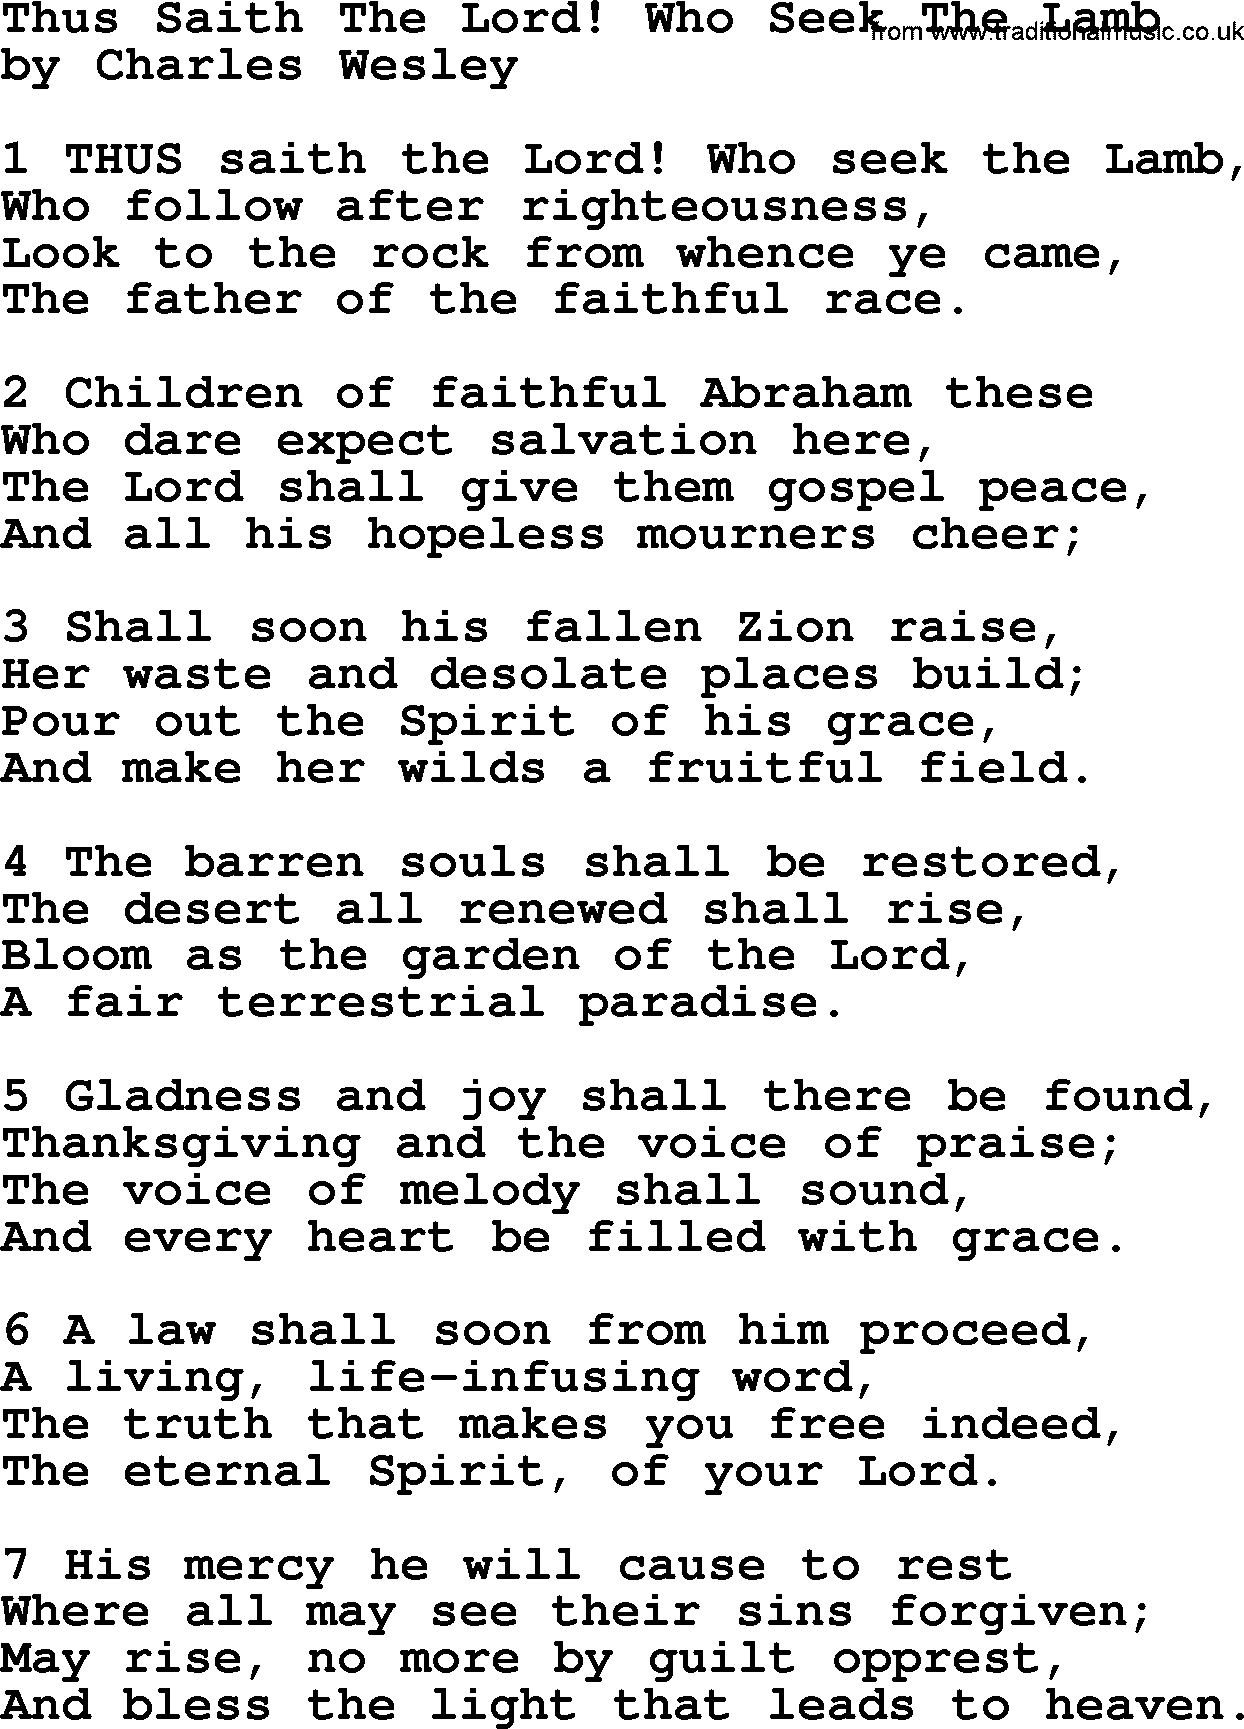 Charles Wesley hymn: Thus Saith The Lord! Who Seek The Lamb, lyrics